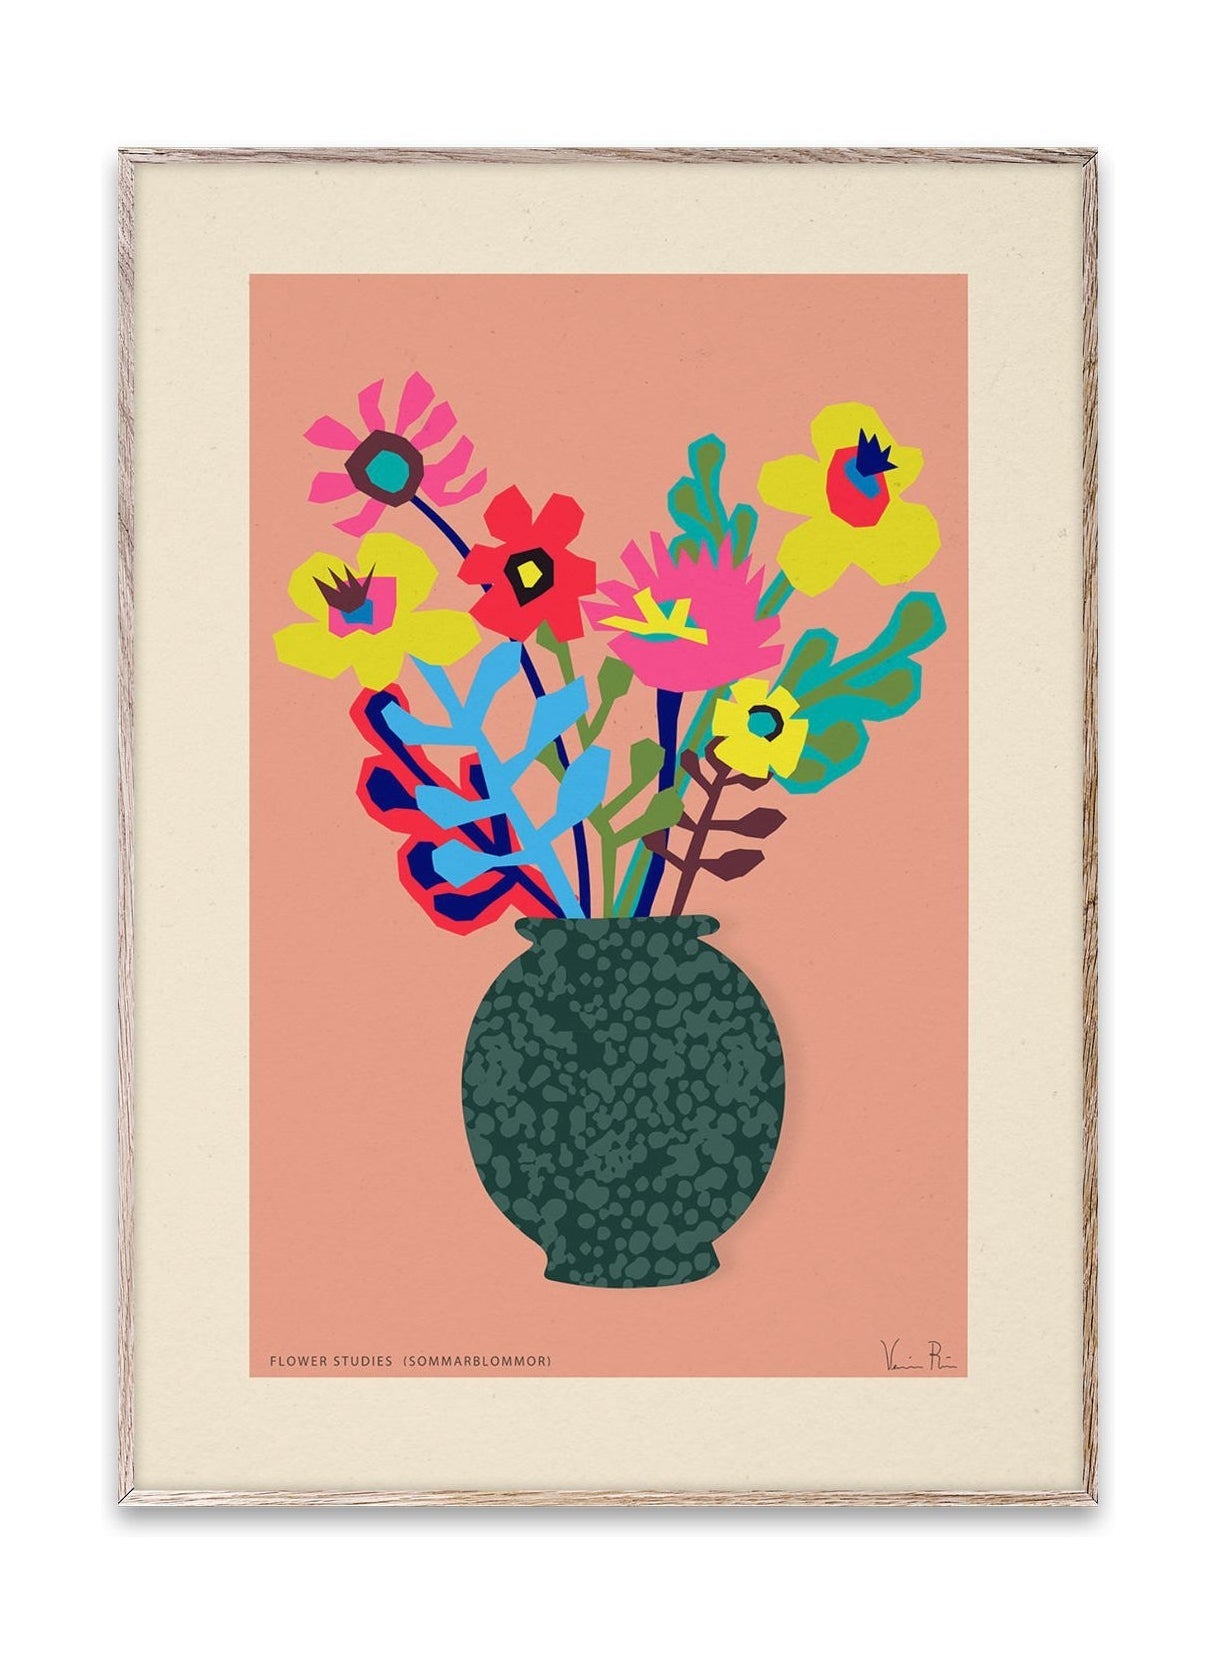 Paper Collective Flower Studies 02 (Sommarblommar) Cartel, 50x70 cm